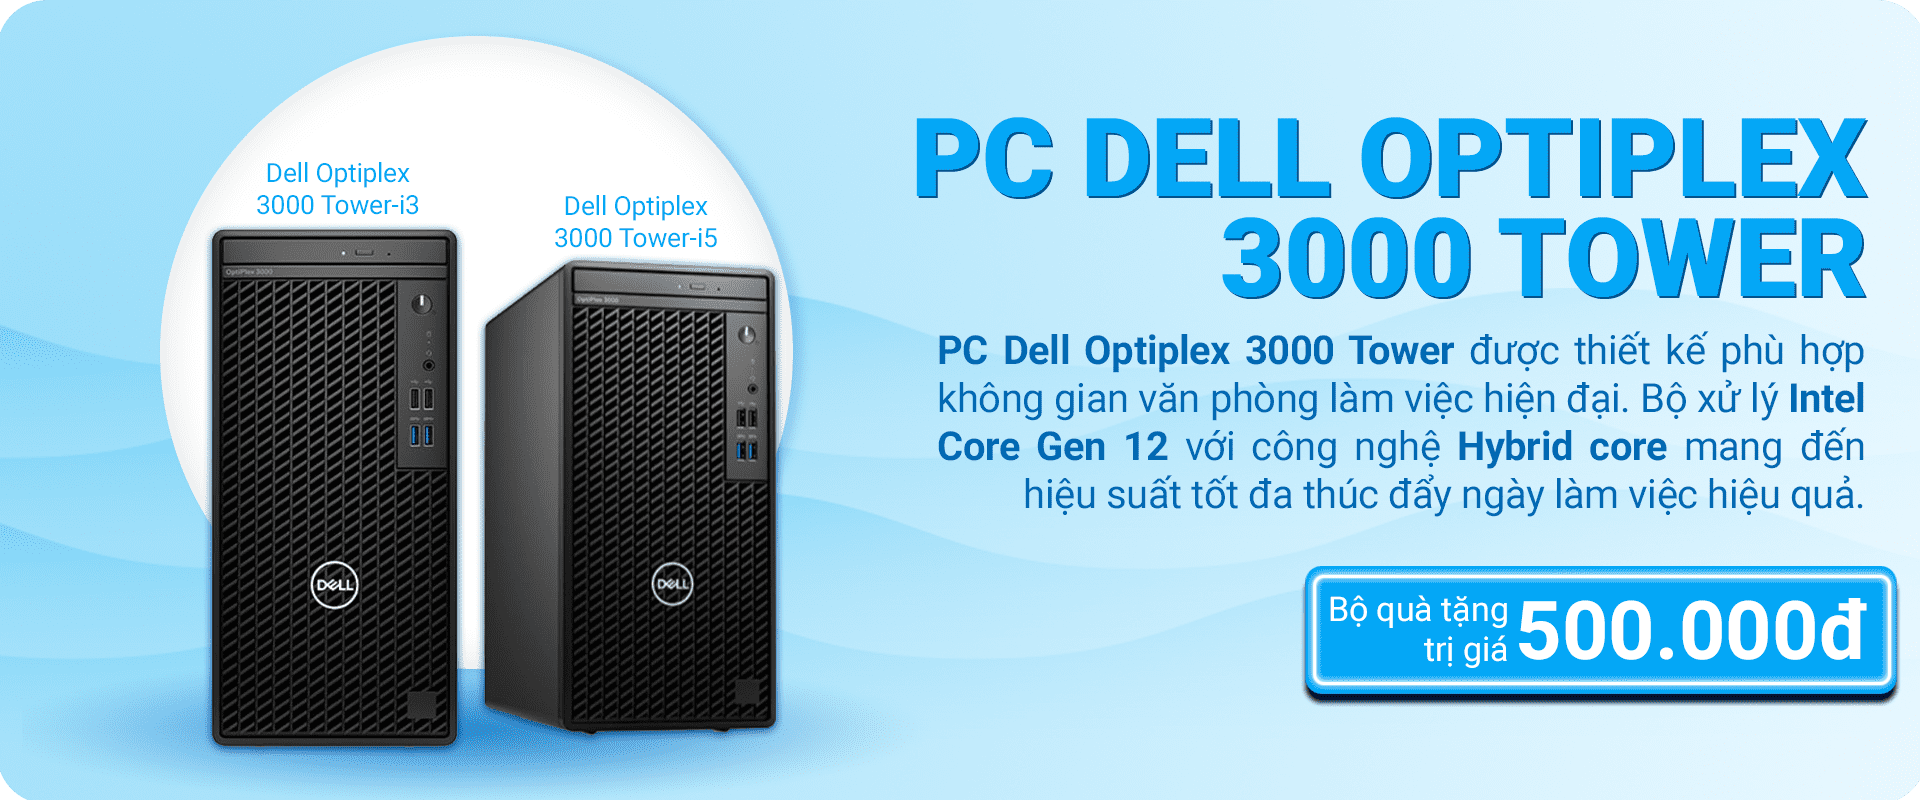 Dell Optiplex 3000 Tower nhom 1 6